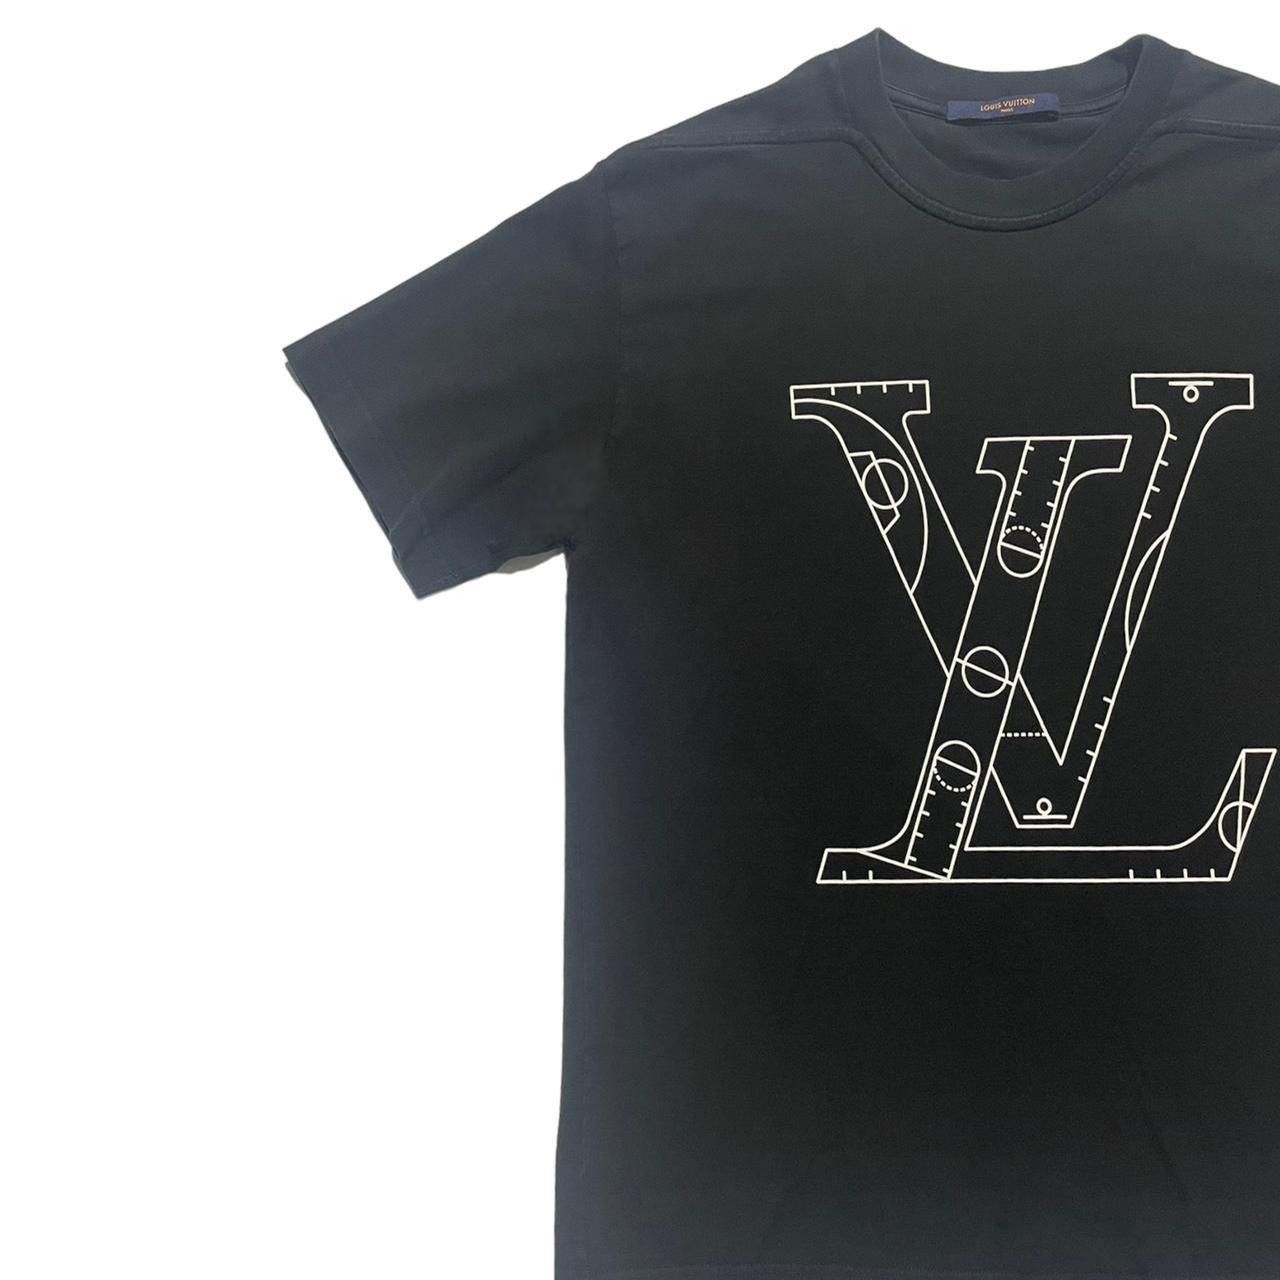 Louis Vuitton long sleeve T shirt LV on the - Depop